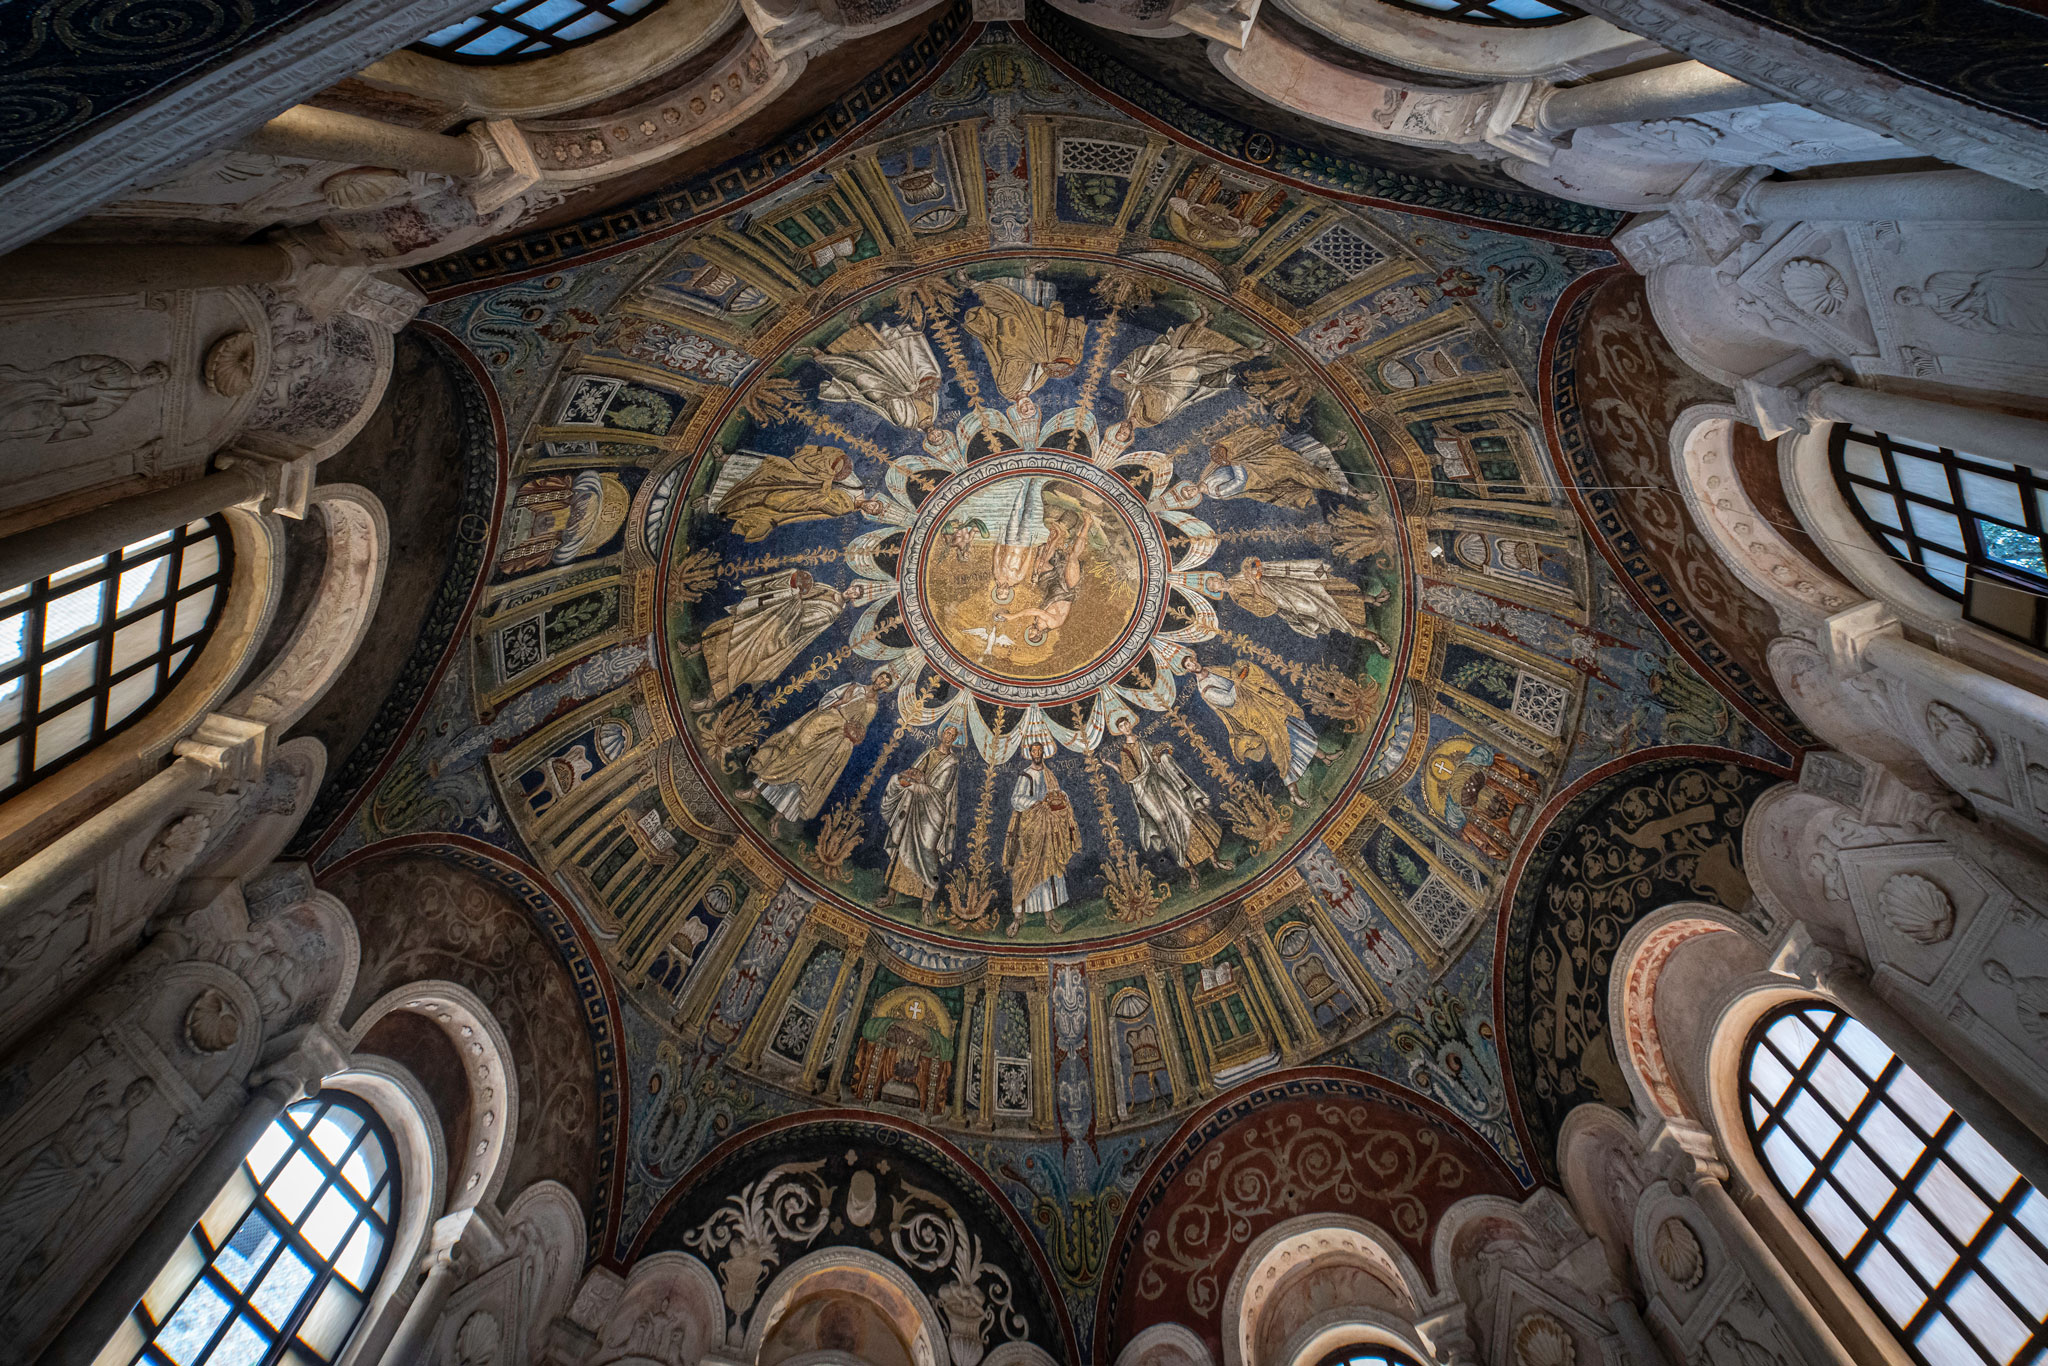 Ravenna's Byzantine mosaics are impeccable